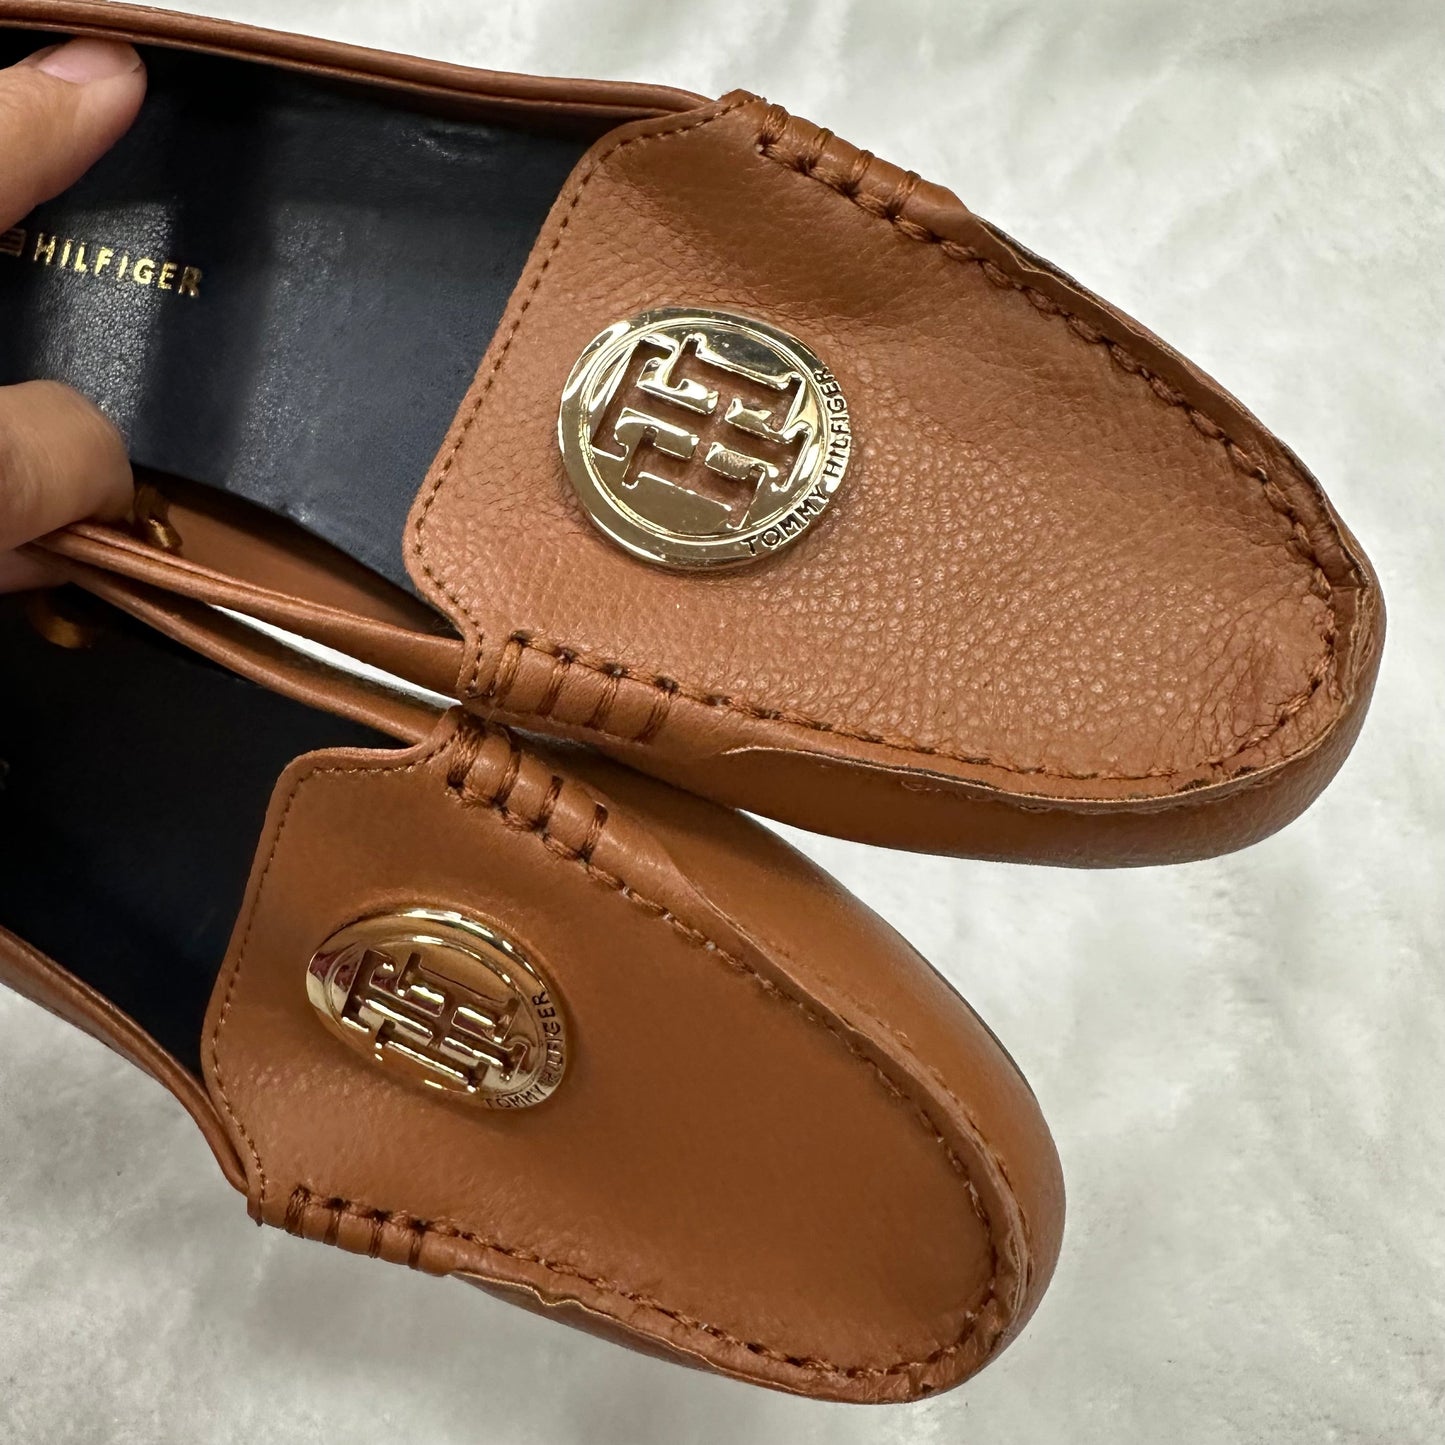 Camel Shoes Flats Loafer Oxford Tommy Hilfiger O, Size 6.5